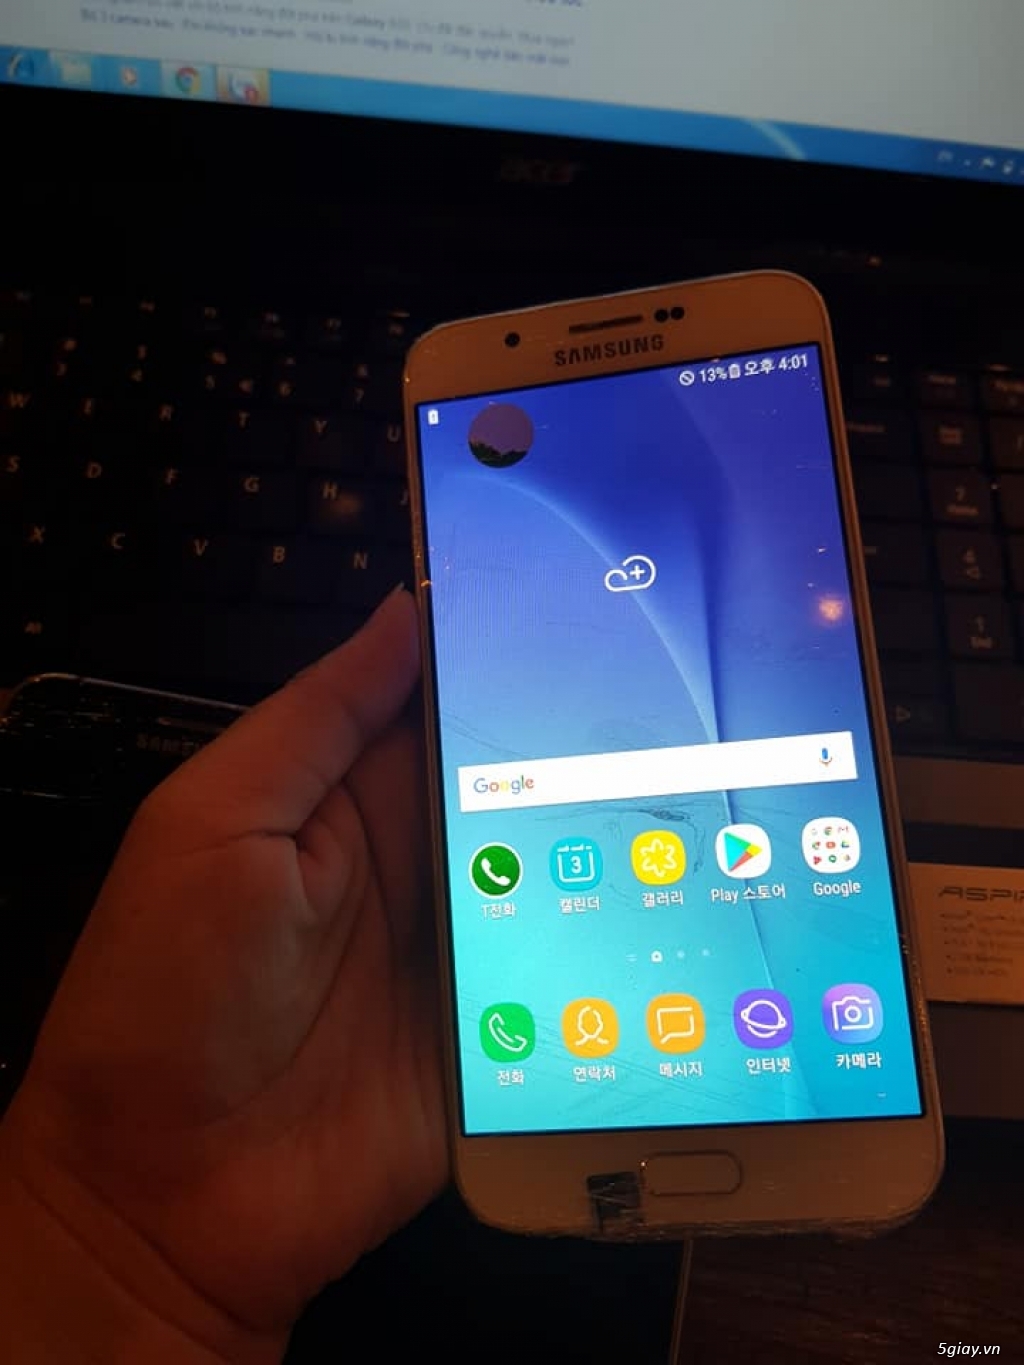 Bán lẻ giá sỉ Samsung Galaxy A8 (2015) Zin đẹp 99% - 2